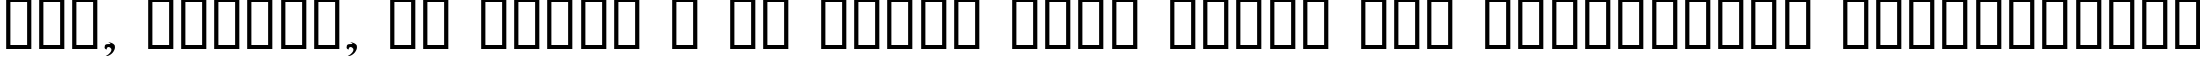 Пример написания шрифтом Buffied текста на украинском